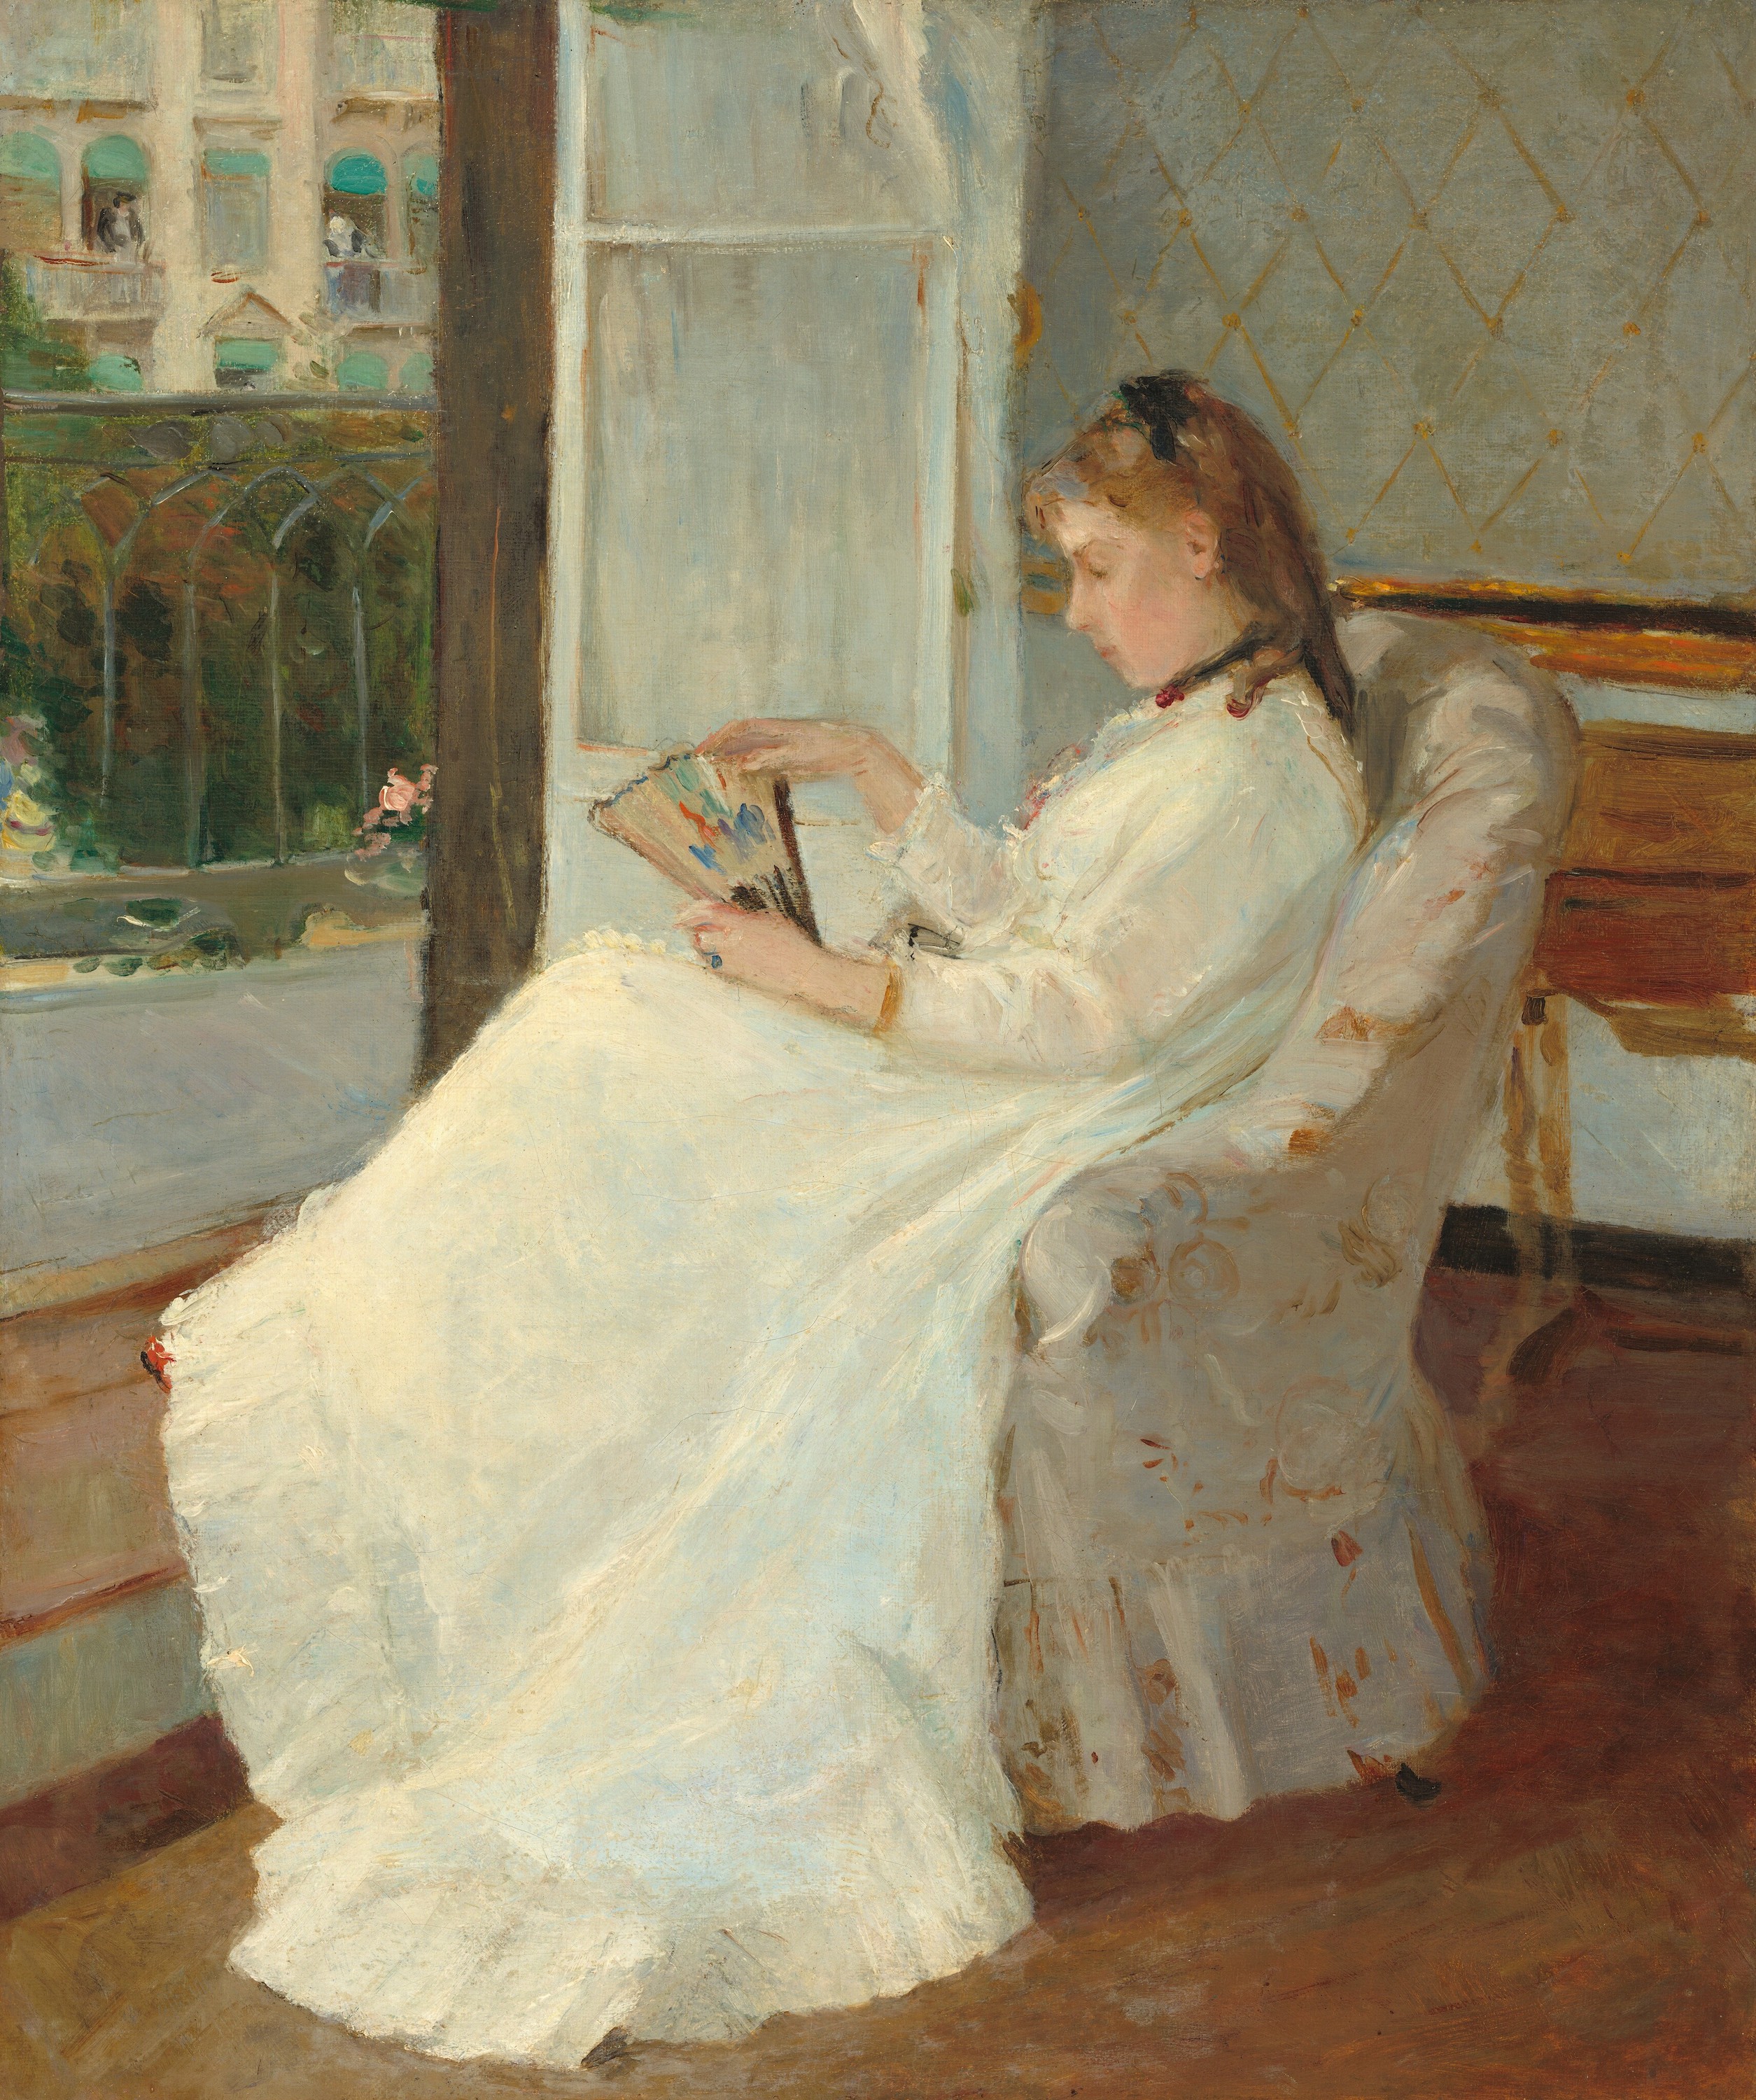 Sora artistei la o fereastră by Berthe Morisot - 1869 - 54.8 x 46.3 cm 